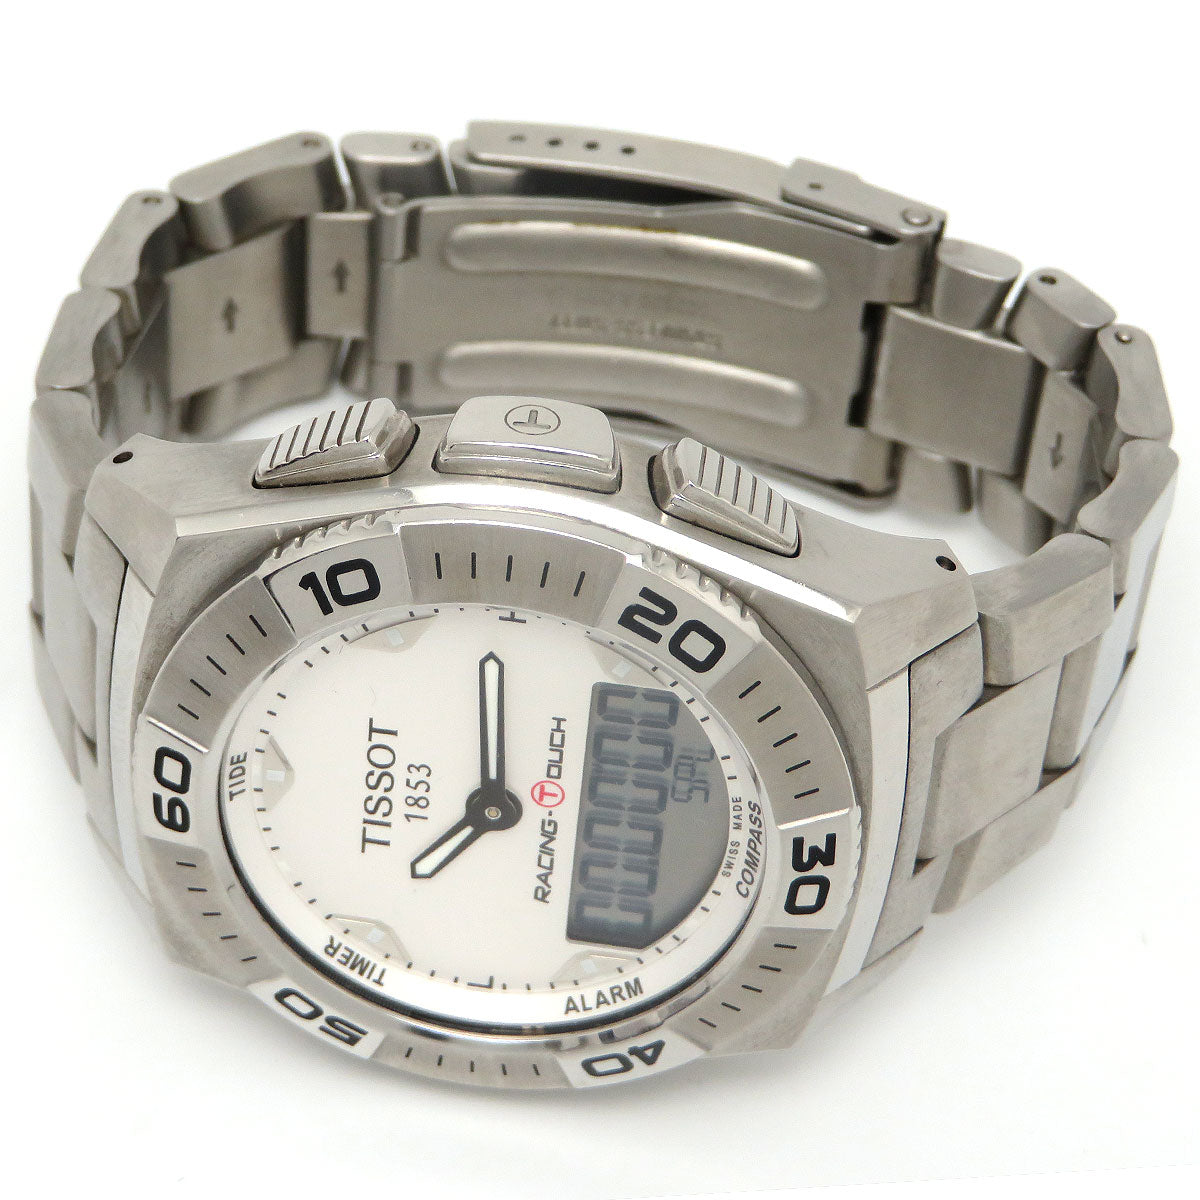 Quartz Racing Touch Wrist Watch T002.520.11.031.00